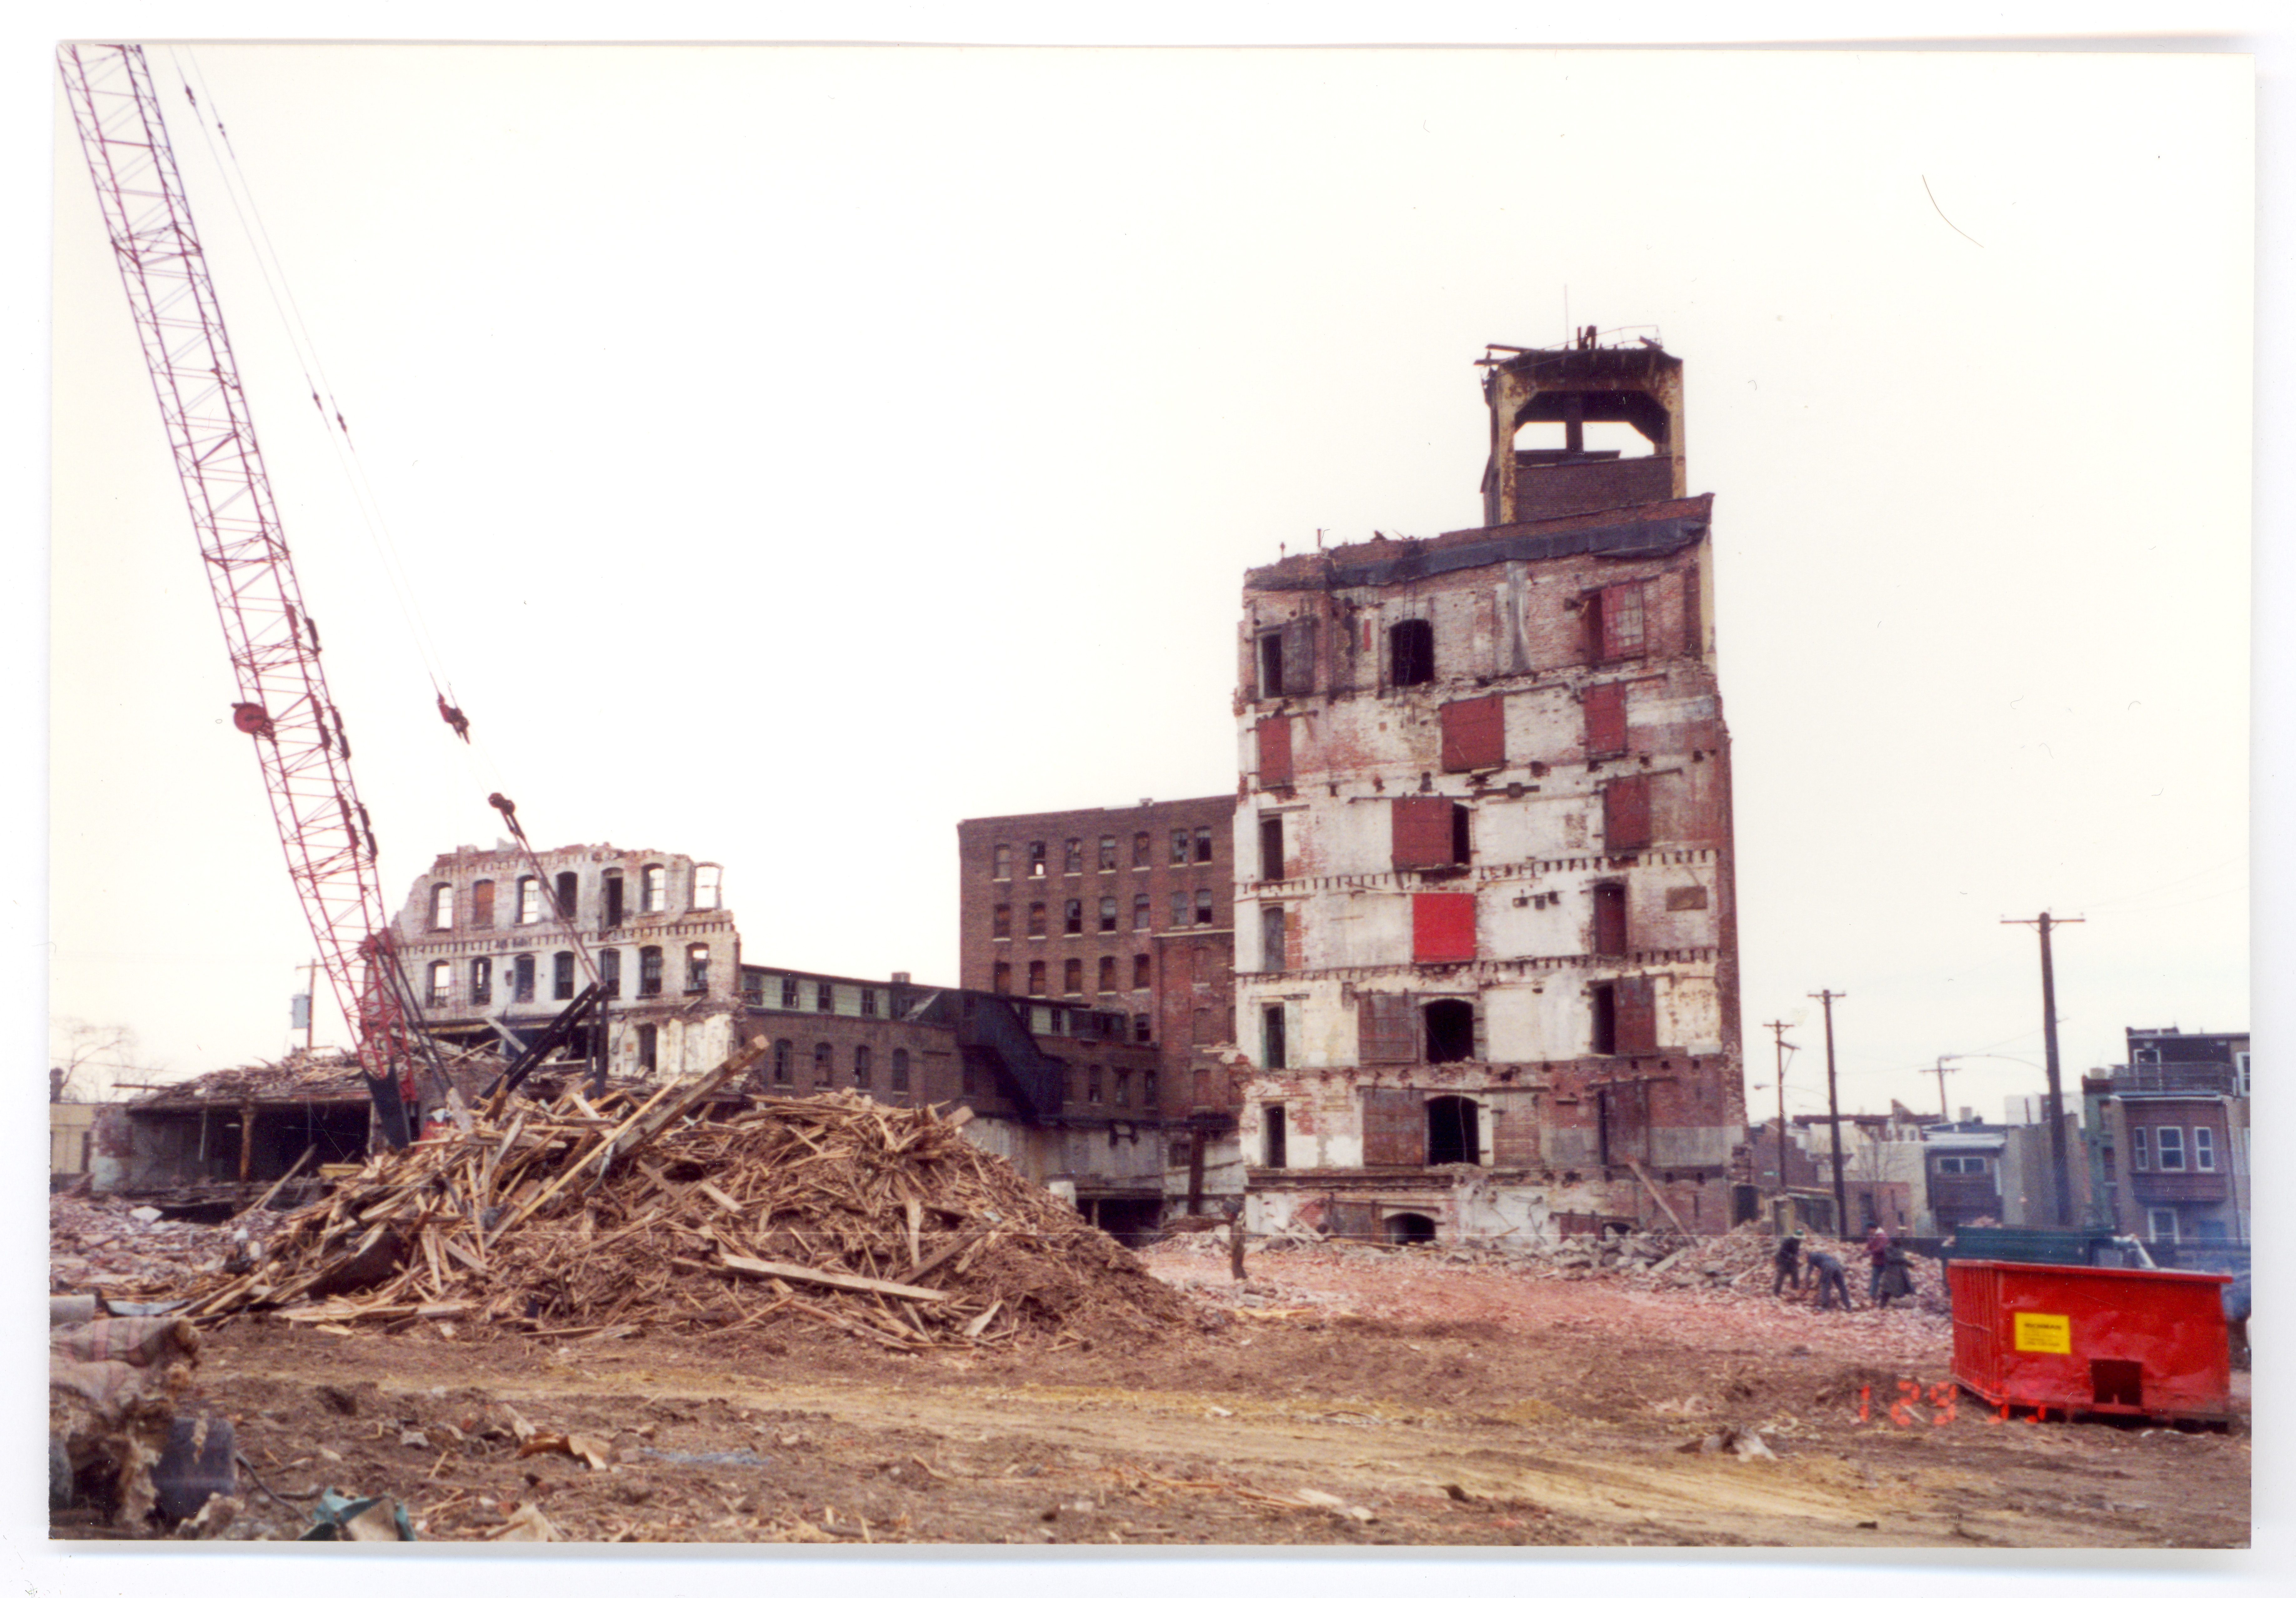 1995 demolition of Burk Brothers complex, photo by Jennifer Baker